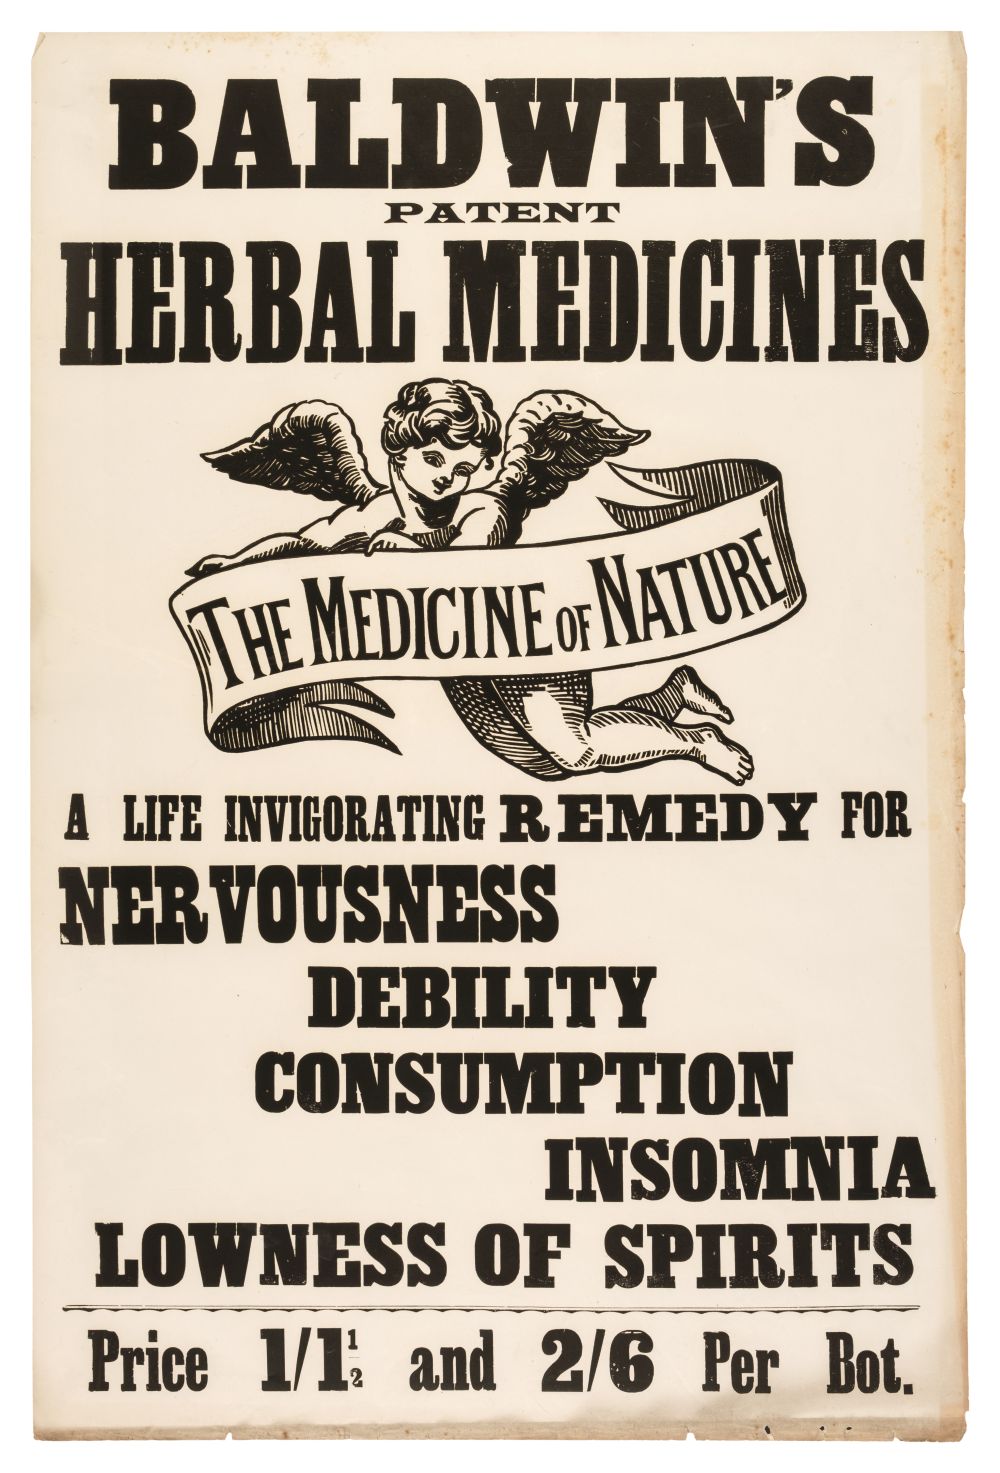 * Advertising Posters. Twenty medicinal advertising posters, circa 1900